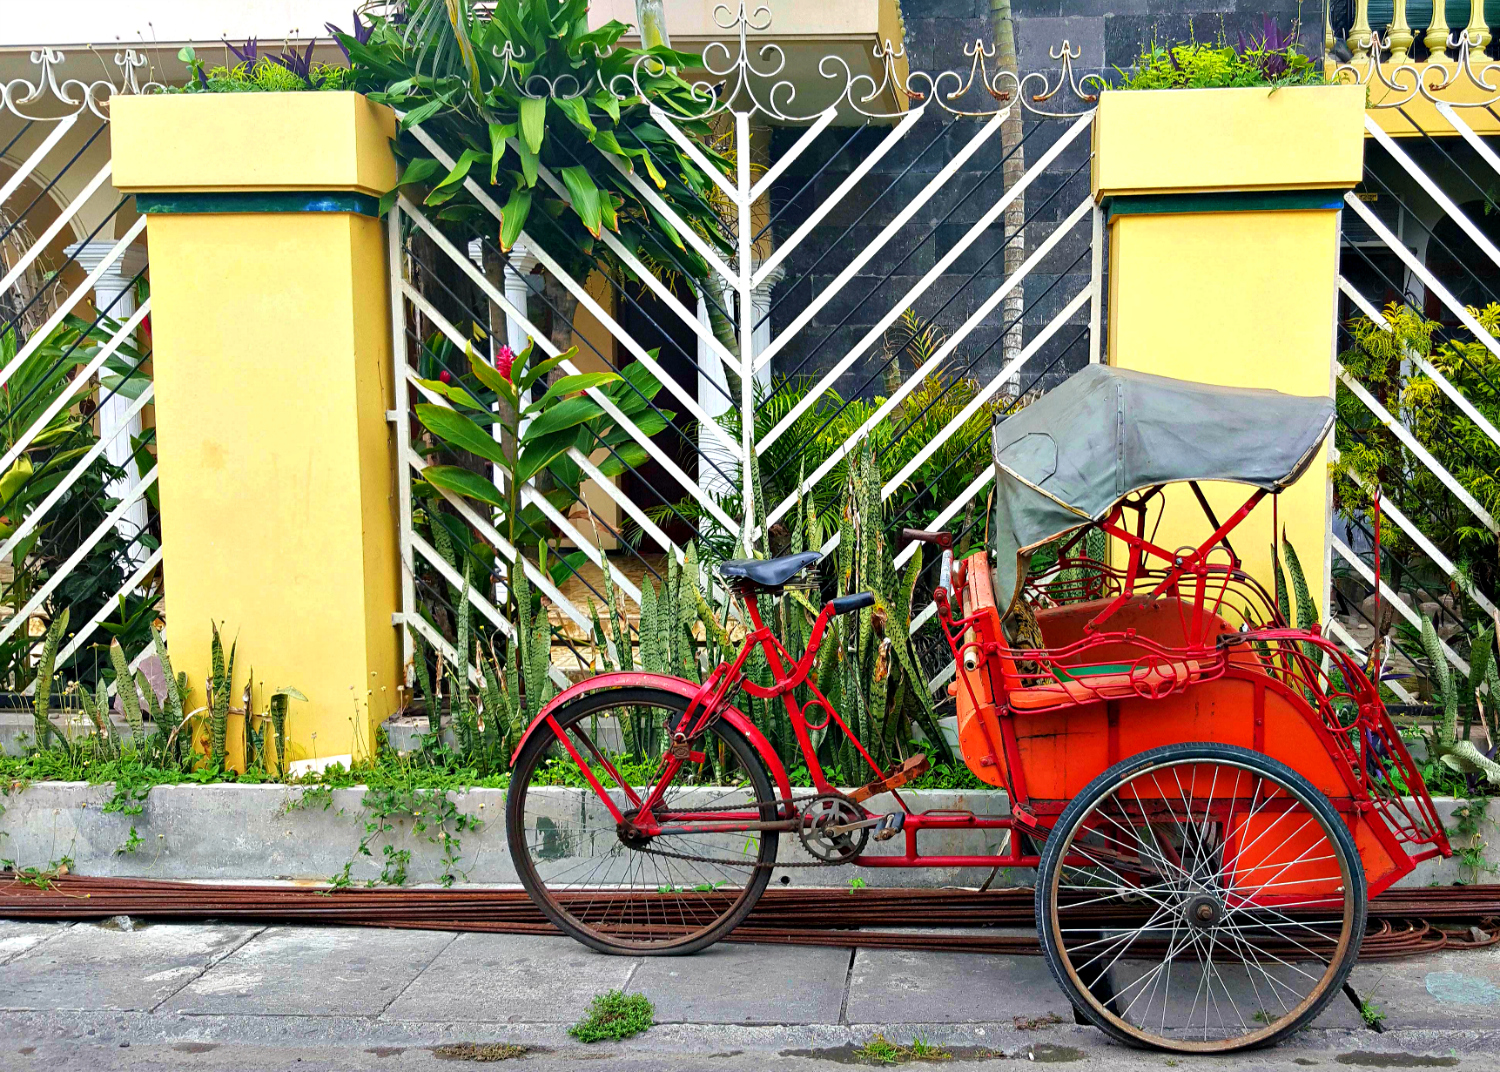 Solo, Jogja, Jakarta; antiques, posh hotels, burqas and betel-nuts